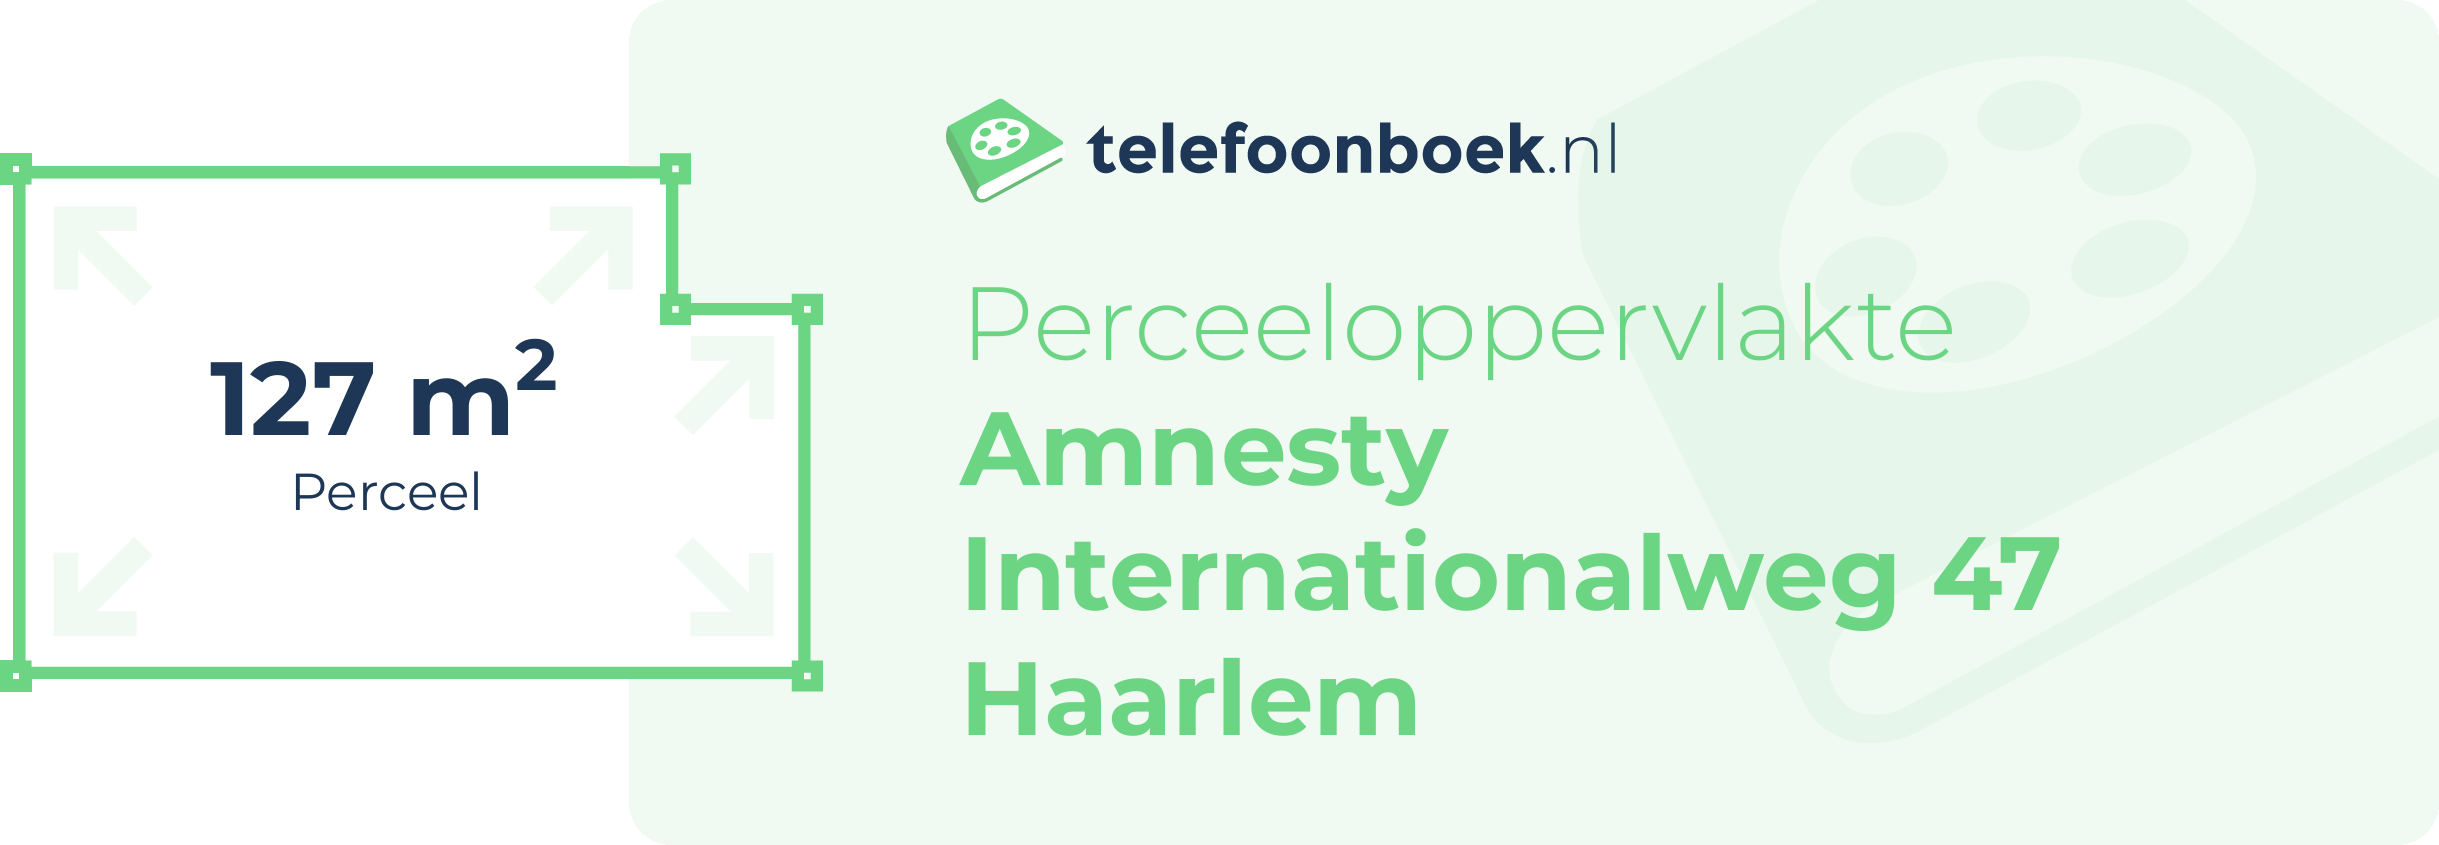 Perceeloppervlakte Amnesty Internationalweg 47 Haarlem